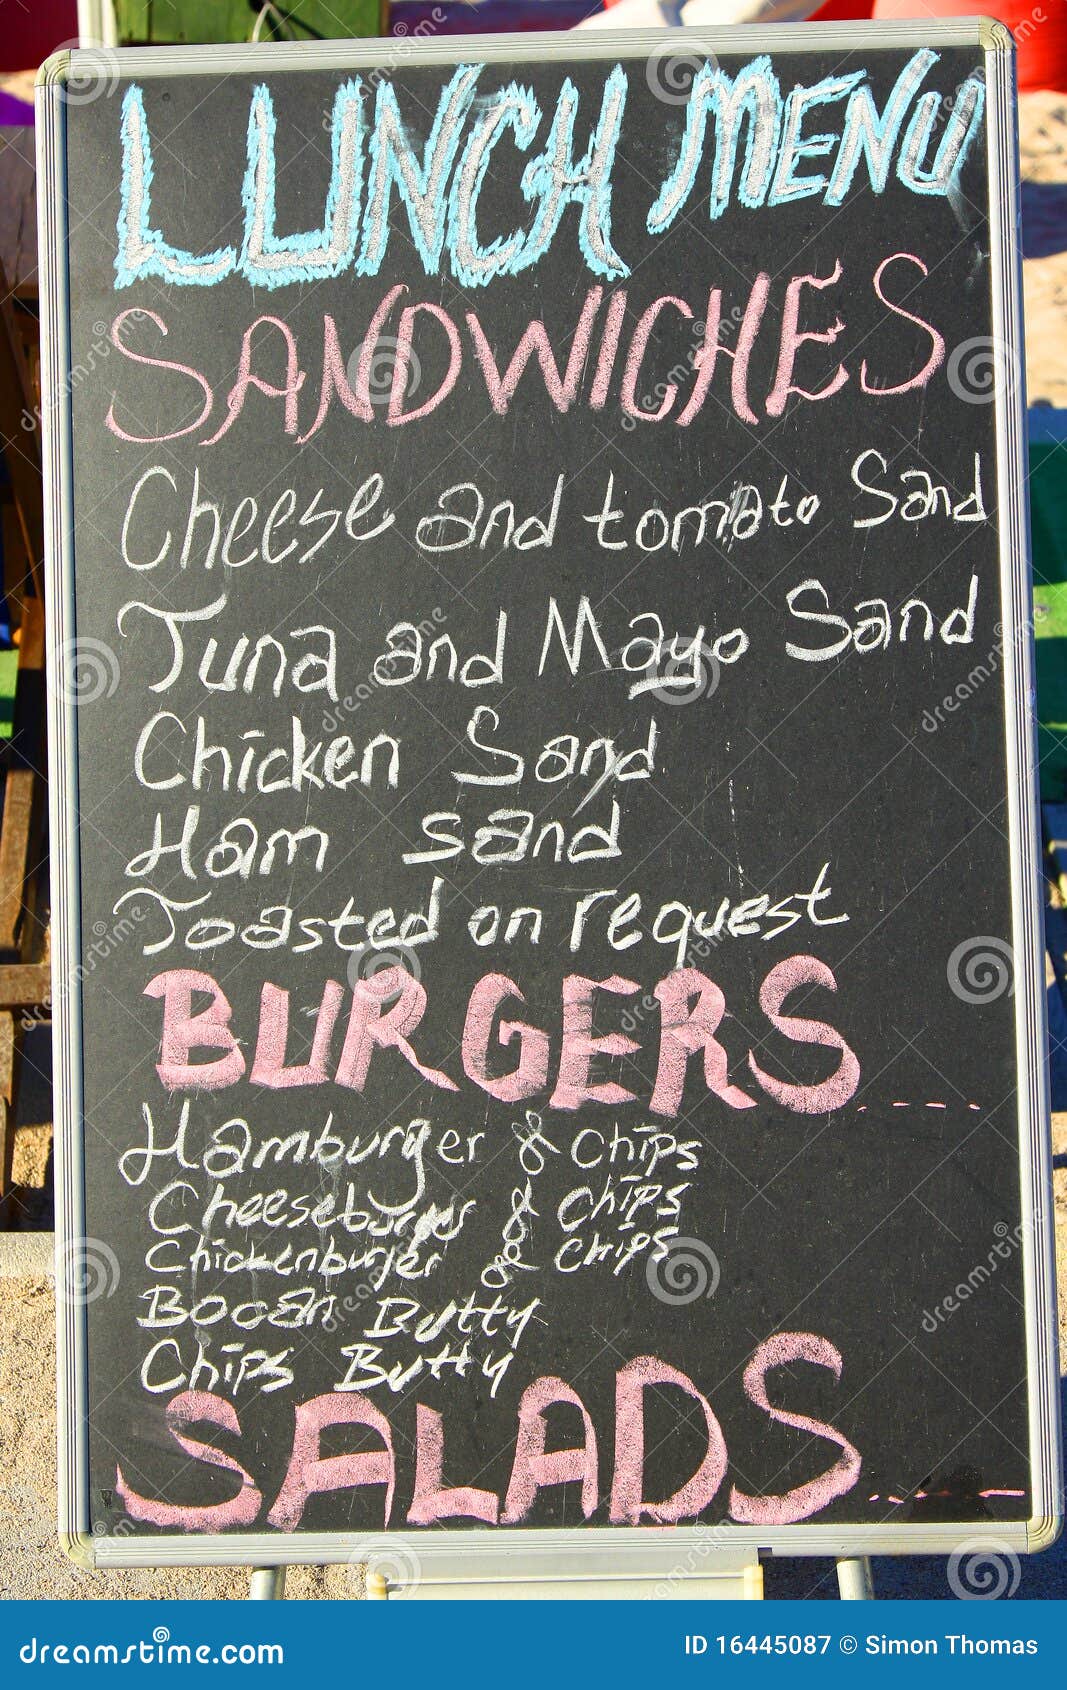 lunch menu board